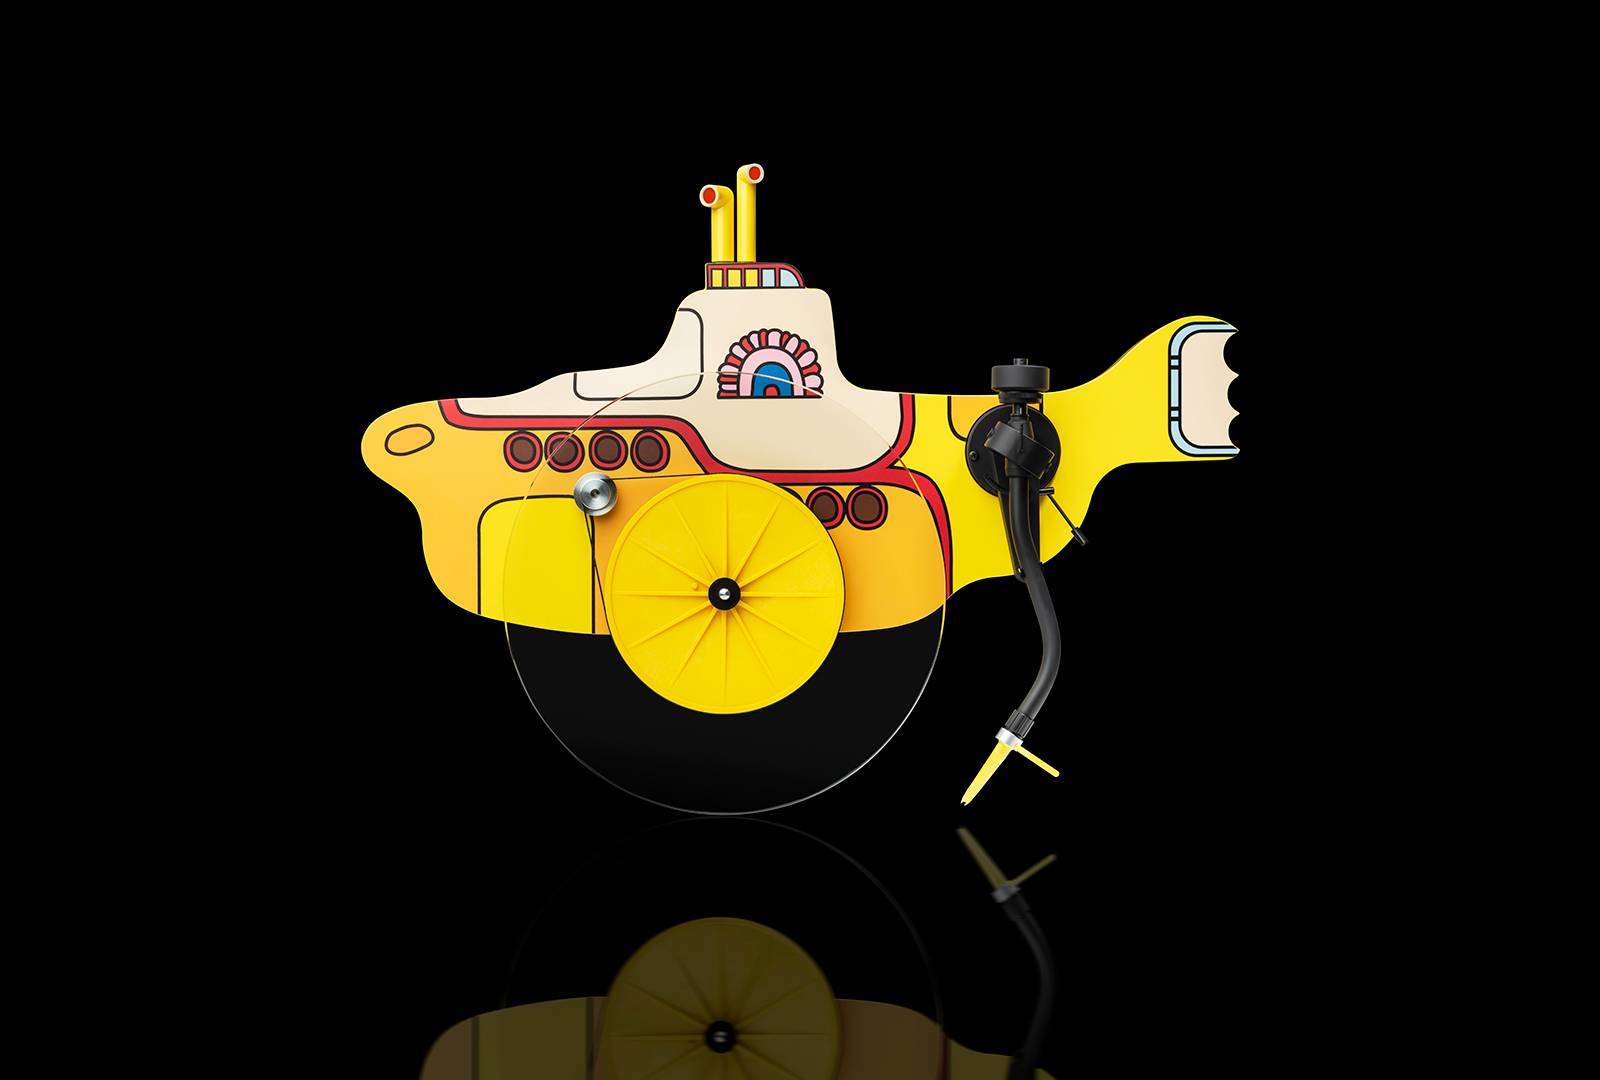 Pro-ject Beatles Yellow Submarine